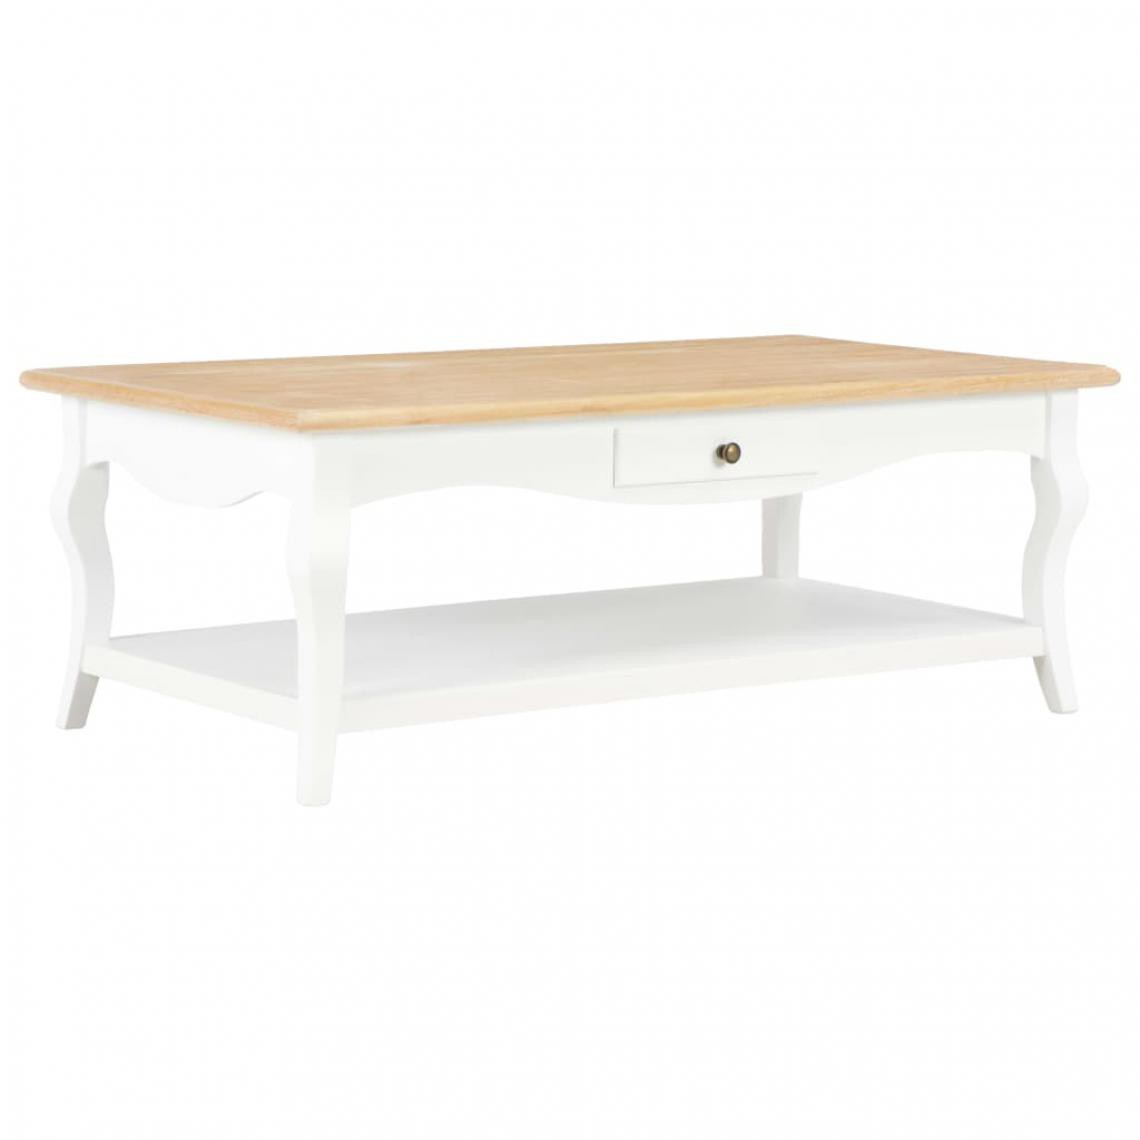 Vidaxl - vidaXL Table basse Blanc 110 x 60 x 40 cm MDF - Tables à manger